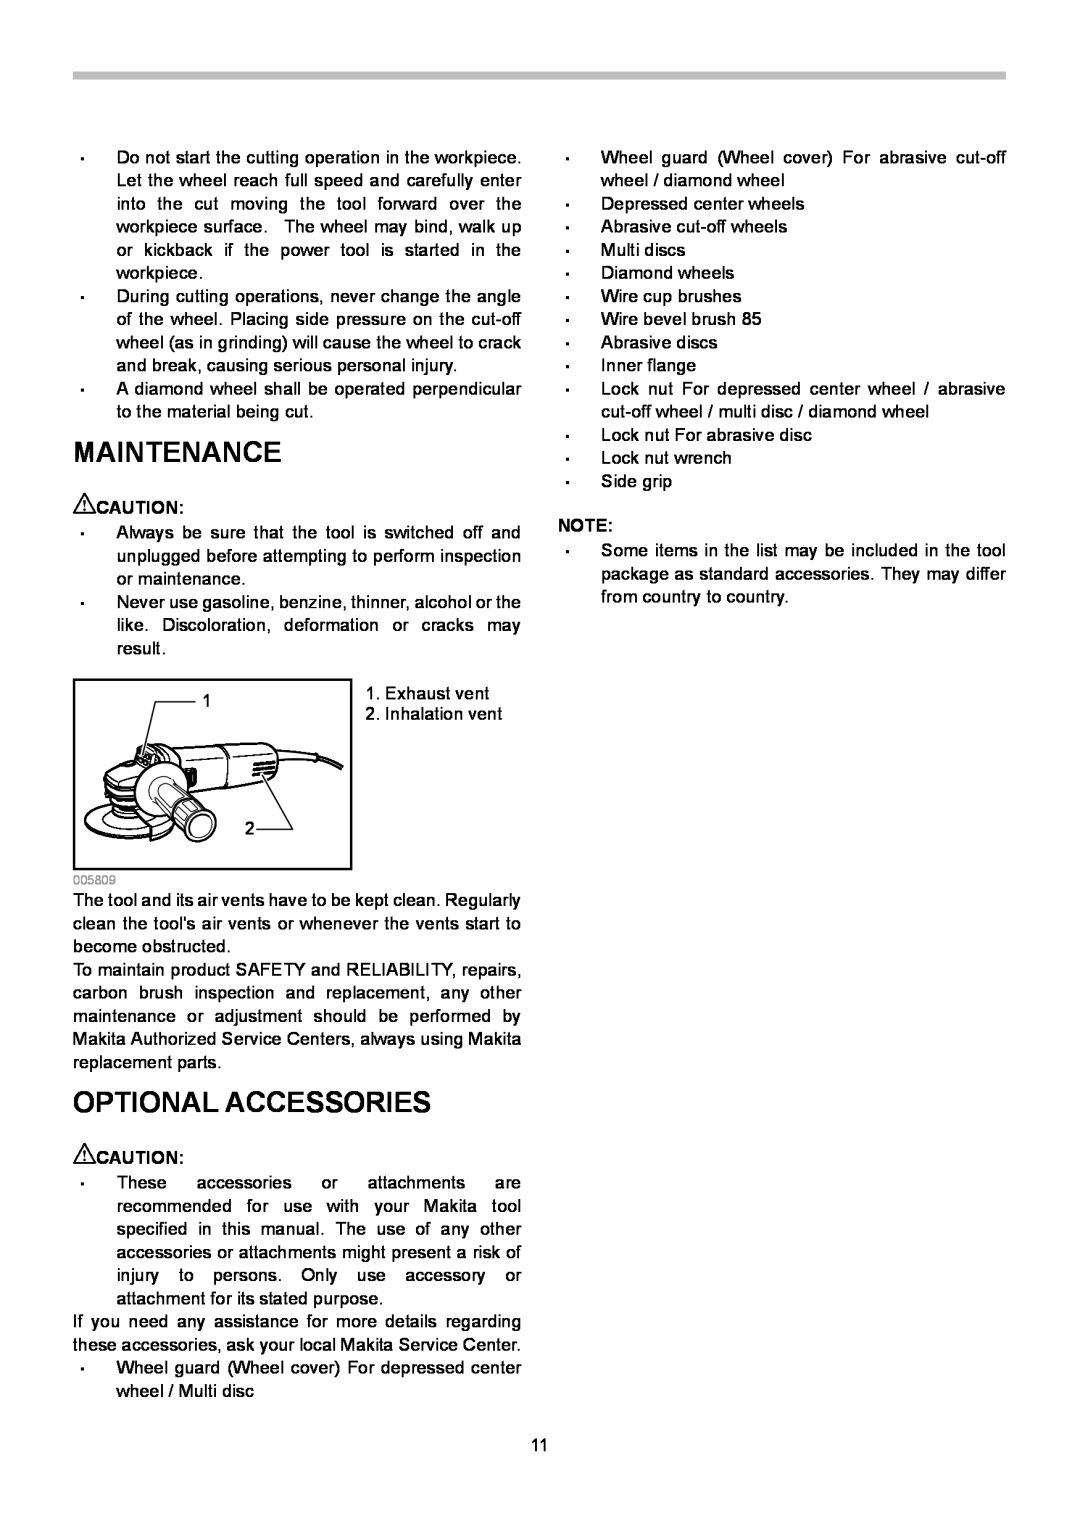 Makita 9557NB, 9556NB, 9558NB instruction manual Maintenance, Optional Accessories 